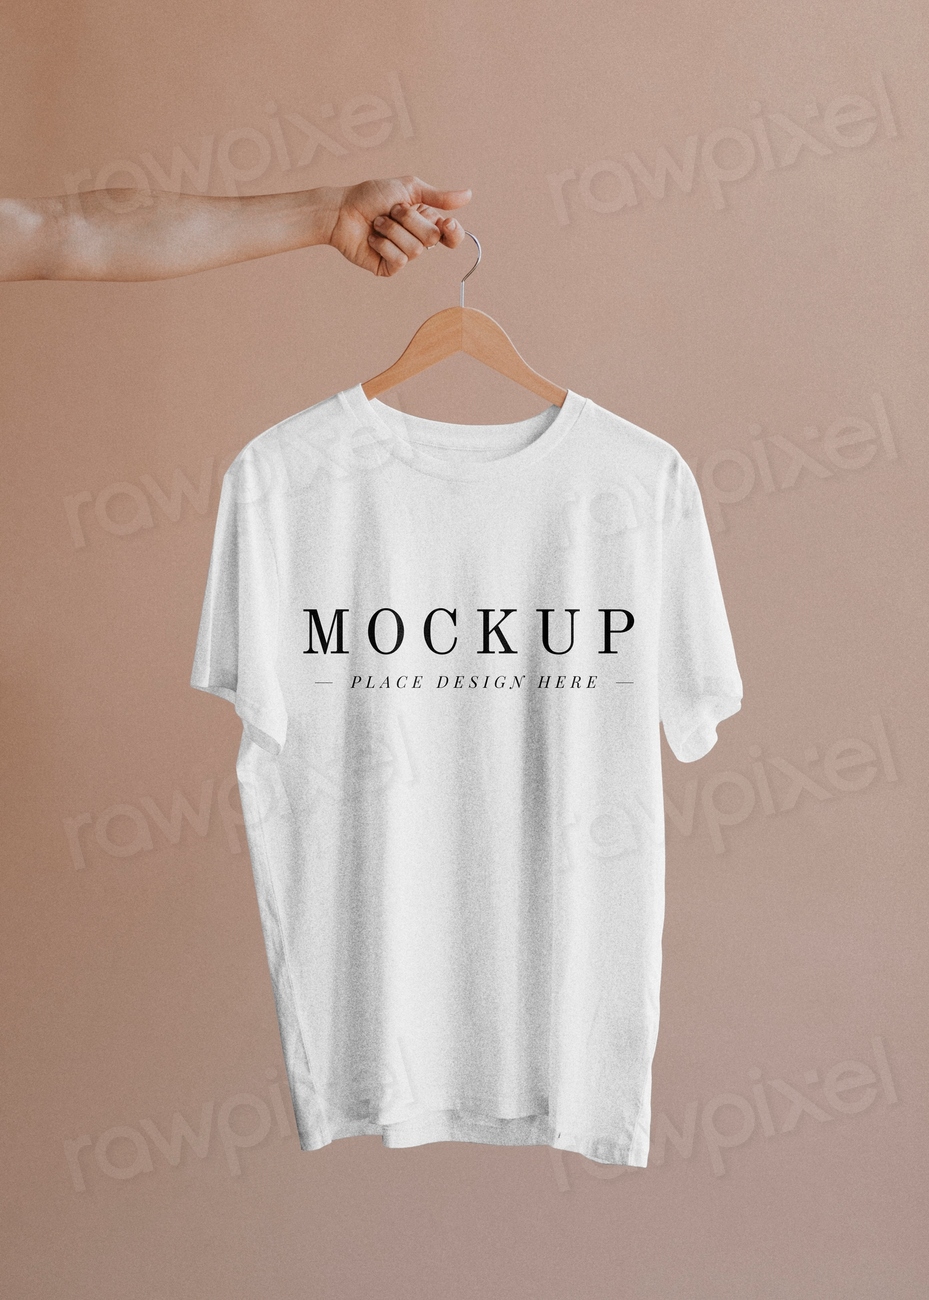 White shirt in a hanger | Premium PSD Mockup - rawpixel